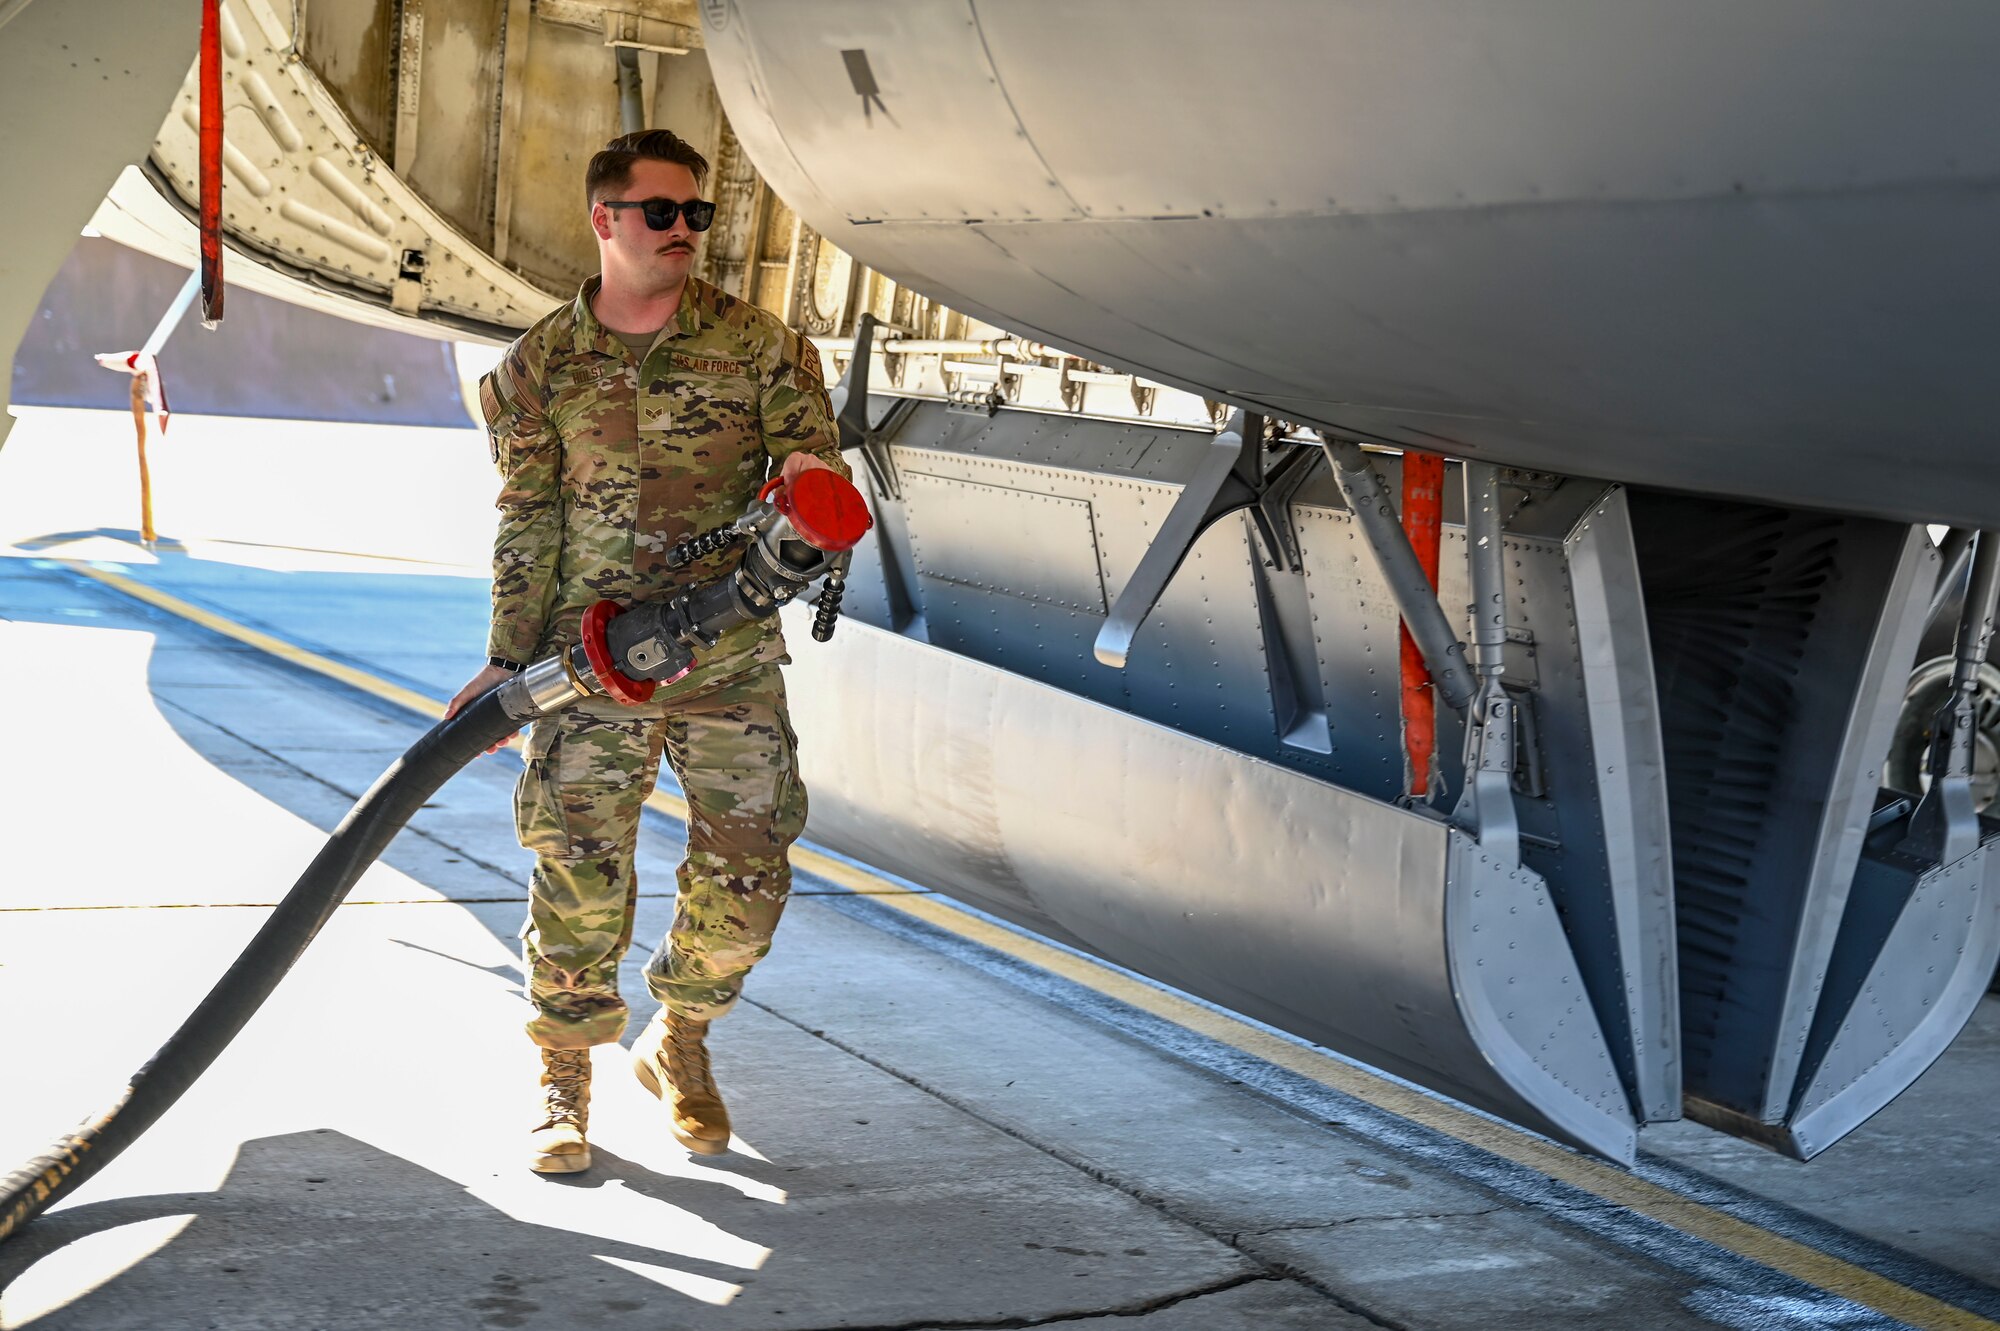 An Airman carries a fuels hose